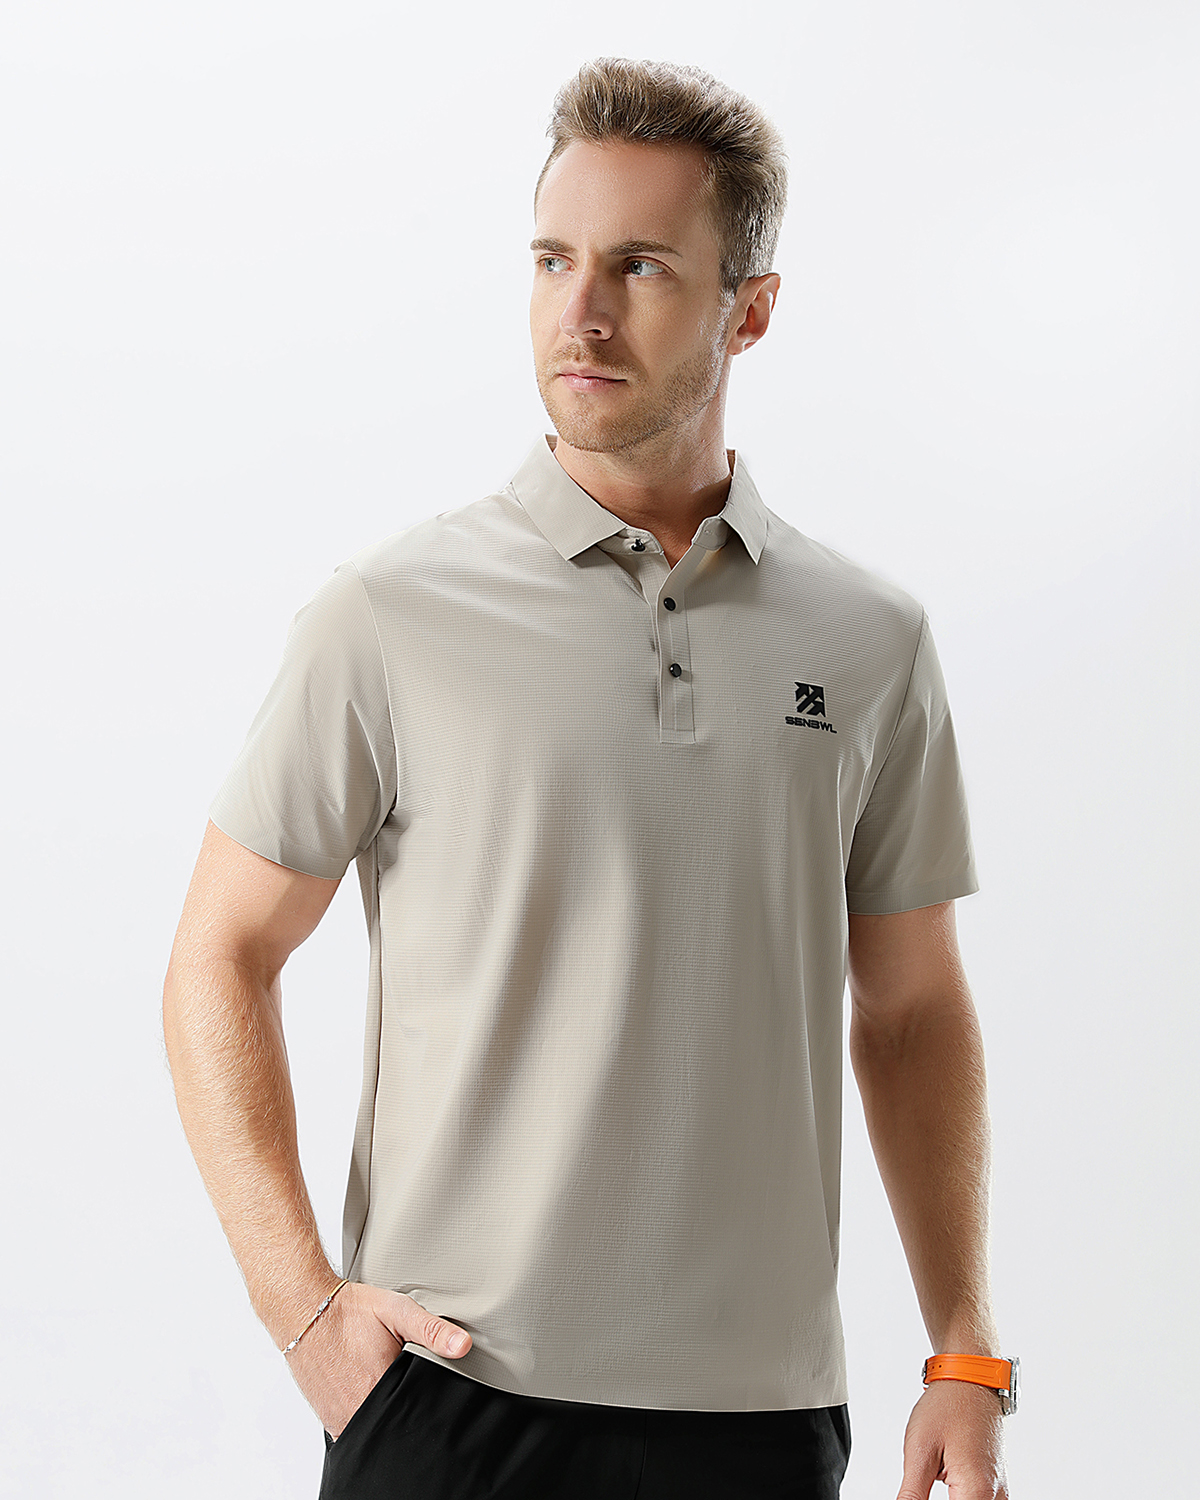 Senbwl Men's Ice Silk Seamless Technology Golf Polo Shirts UPF 50+ Anti-UV